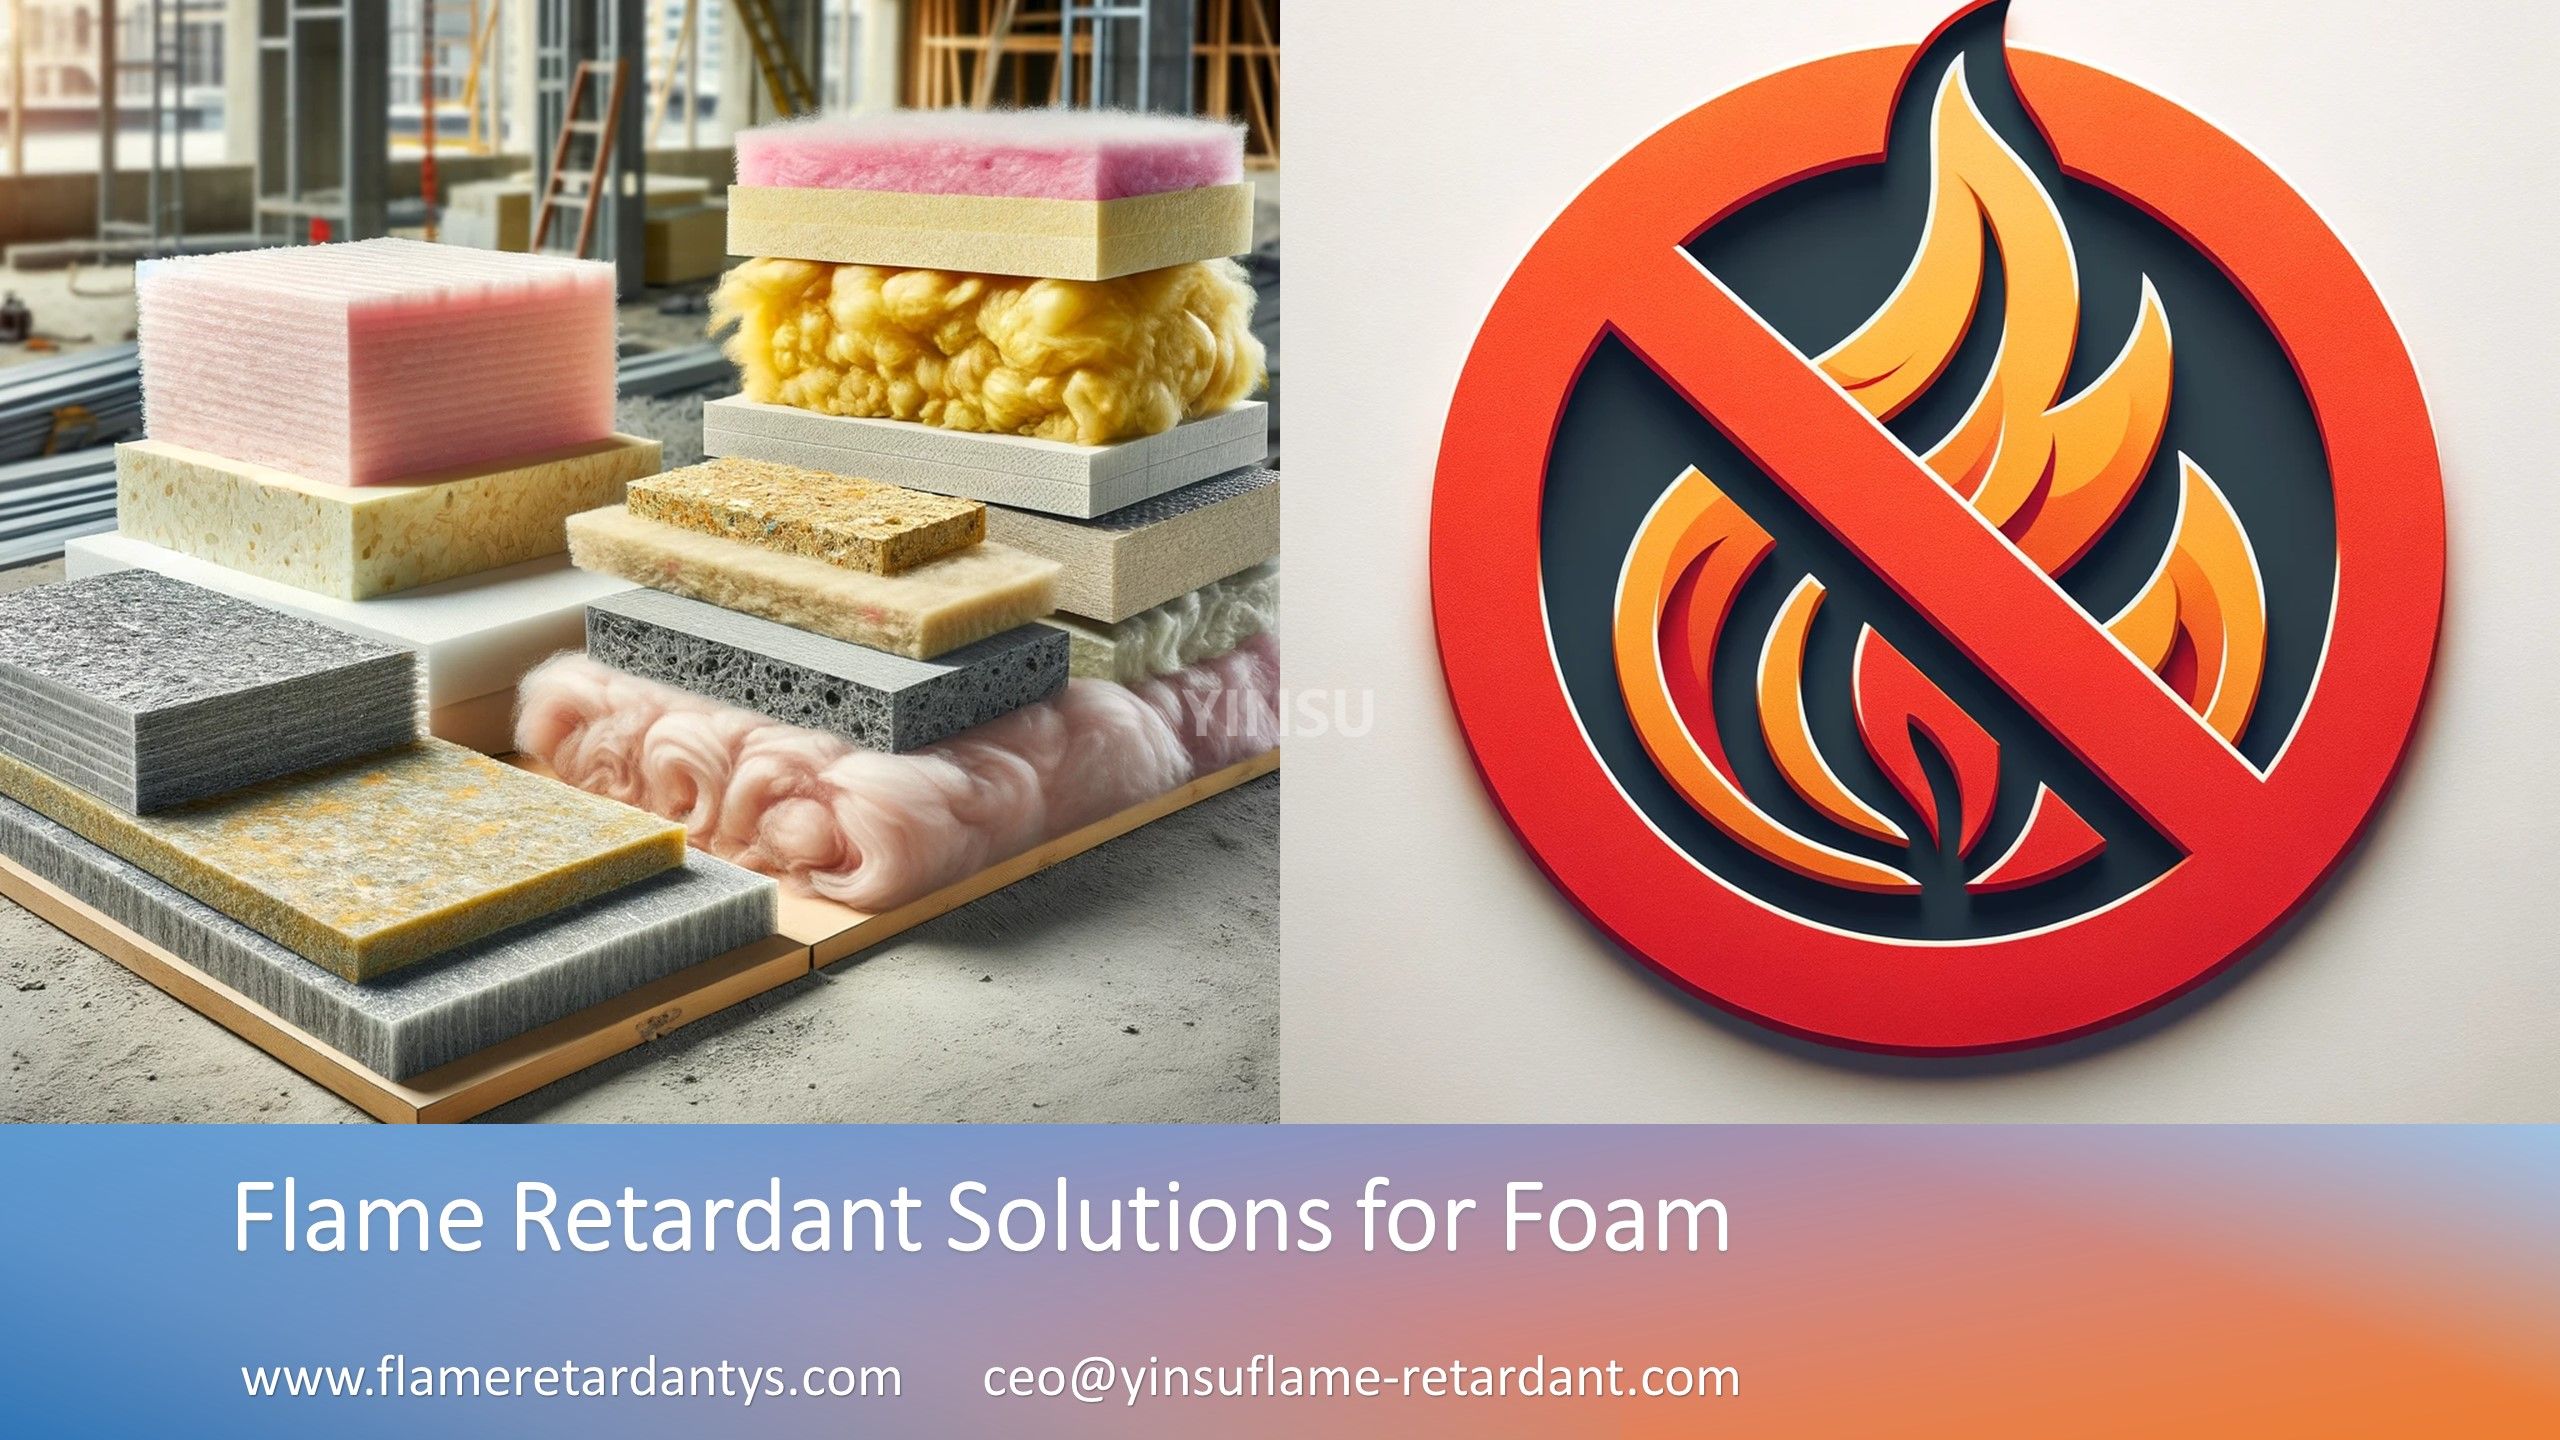 3.1 Flame Retardant Solutions for Foam